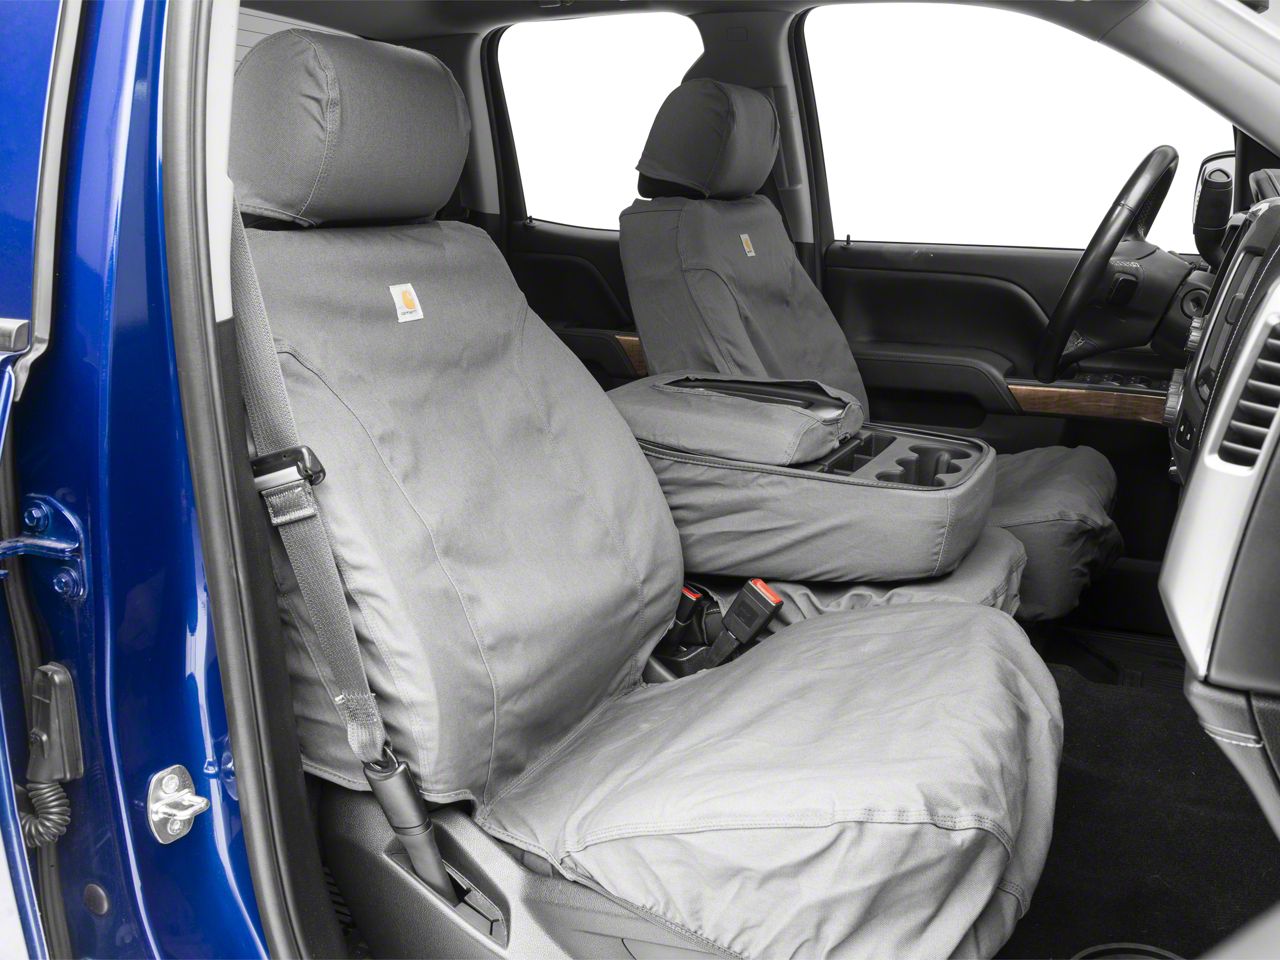 Covercraft Silverado Carhartt Seat Saver Front Covers Gravel S103818 14 18 1500 W Bench - Covercraft Carhartt Seat Covers Ram 1500